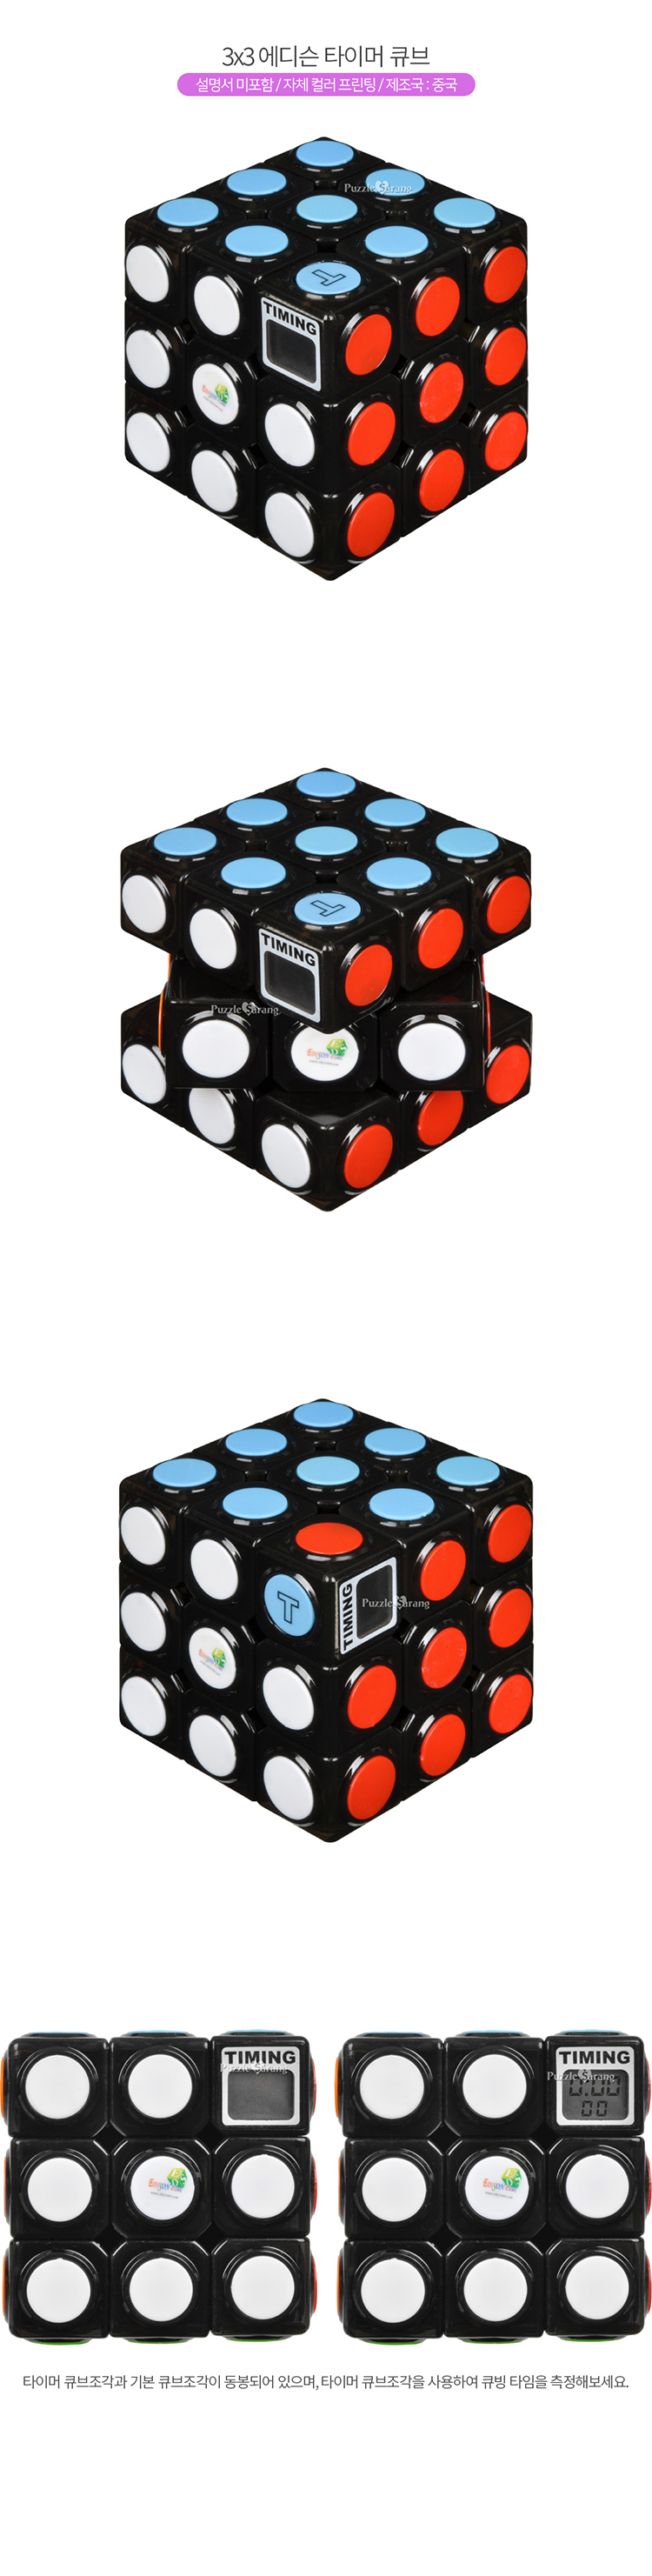 3x3 Edison 타이머 큐브 (블랙) - 신광사 20,000원 - 퍼즐사랑 키덜트/취미, 블록/퍼즐, 조각/퍼즐, 큐브 바보사랑 3x3 Edison 타이머 큐브 (블랙) - 신광사 20,000원 - 퍼즐사랑 키덜트/취미, 블록/퍼즐, 조각/퍼즐, 큐브 바보사랑